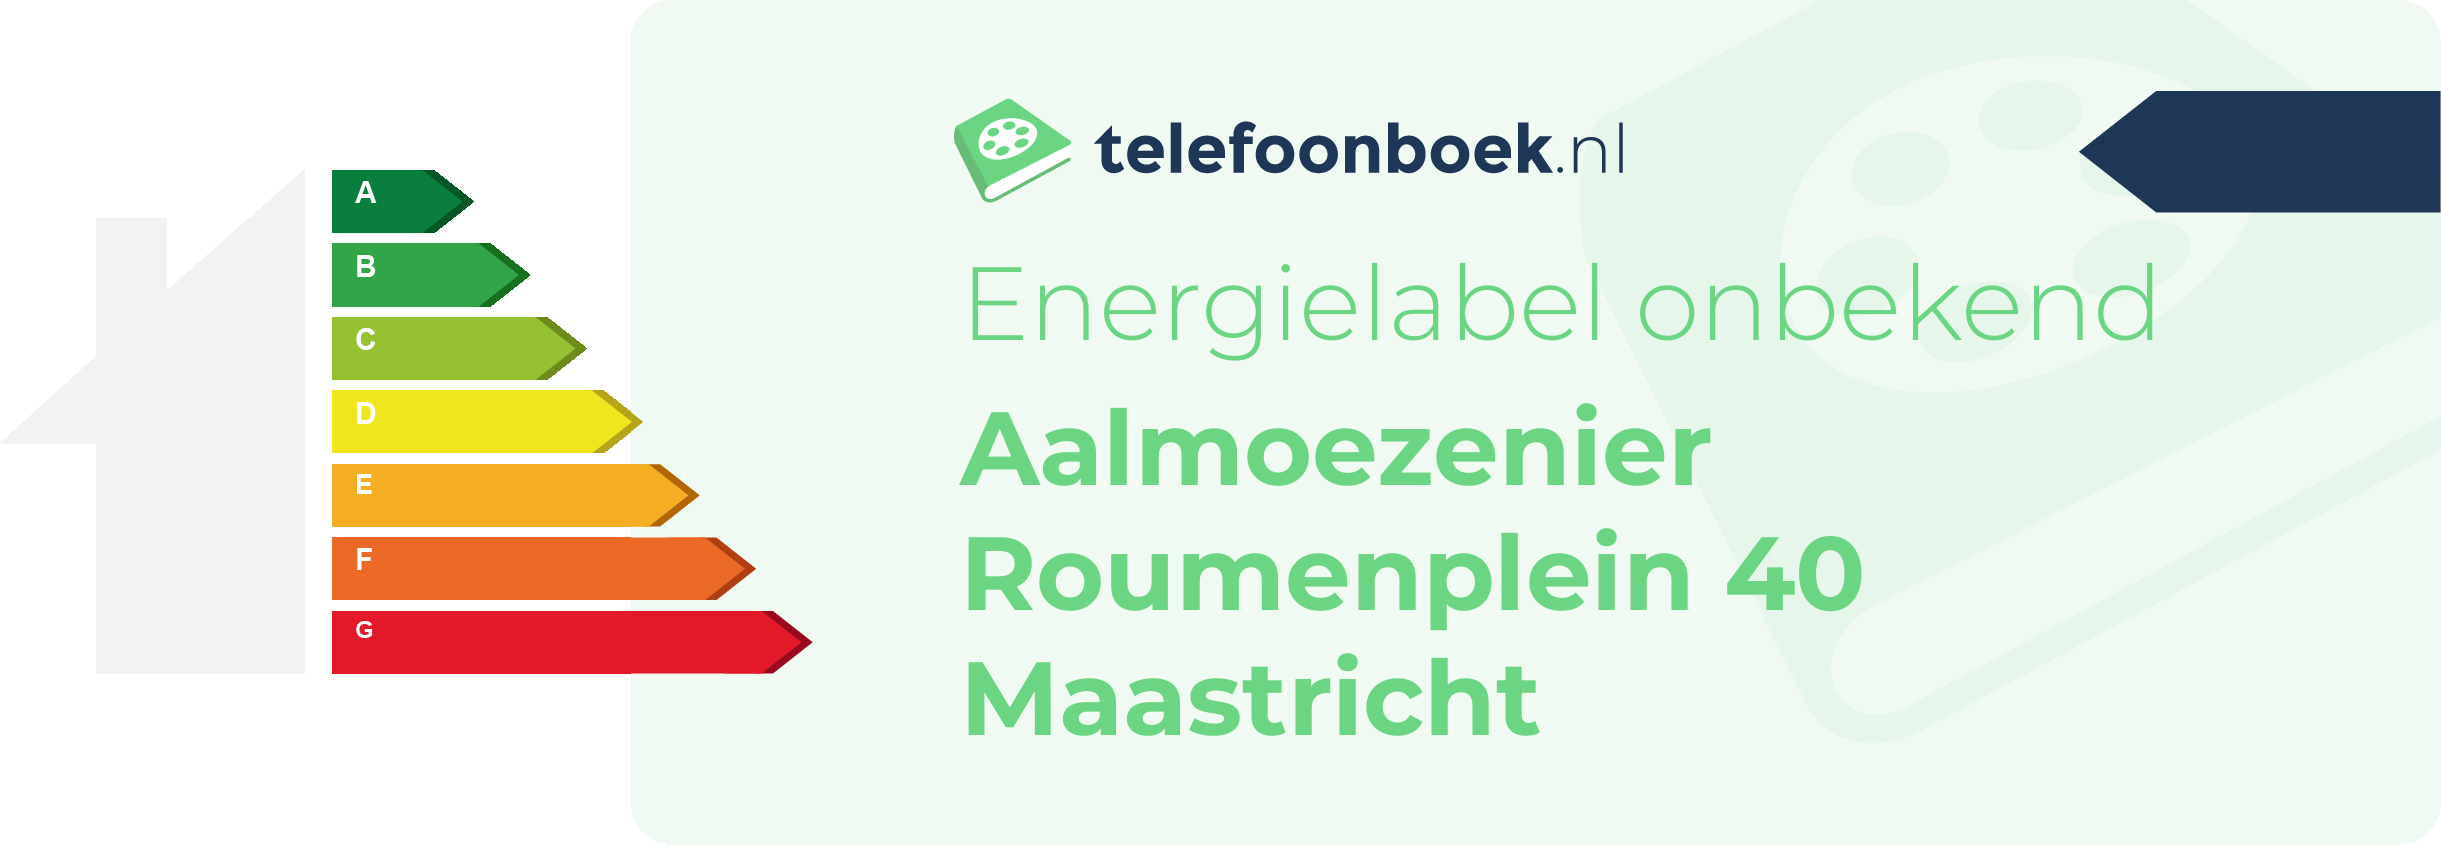 Energielabel Aalmoezenier Roumenplein 40 Maastricht